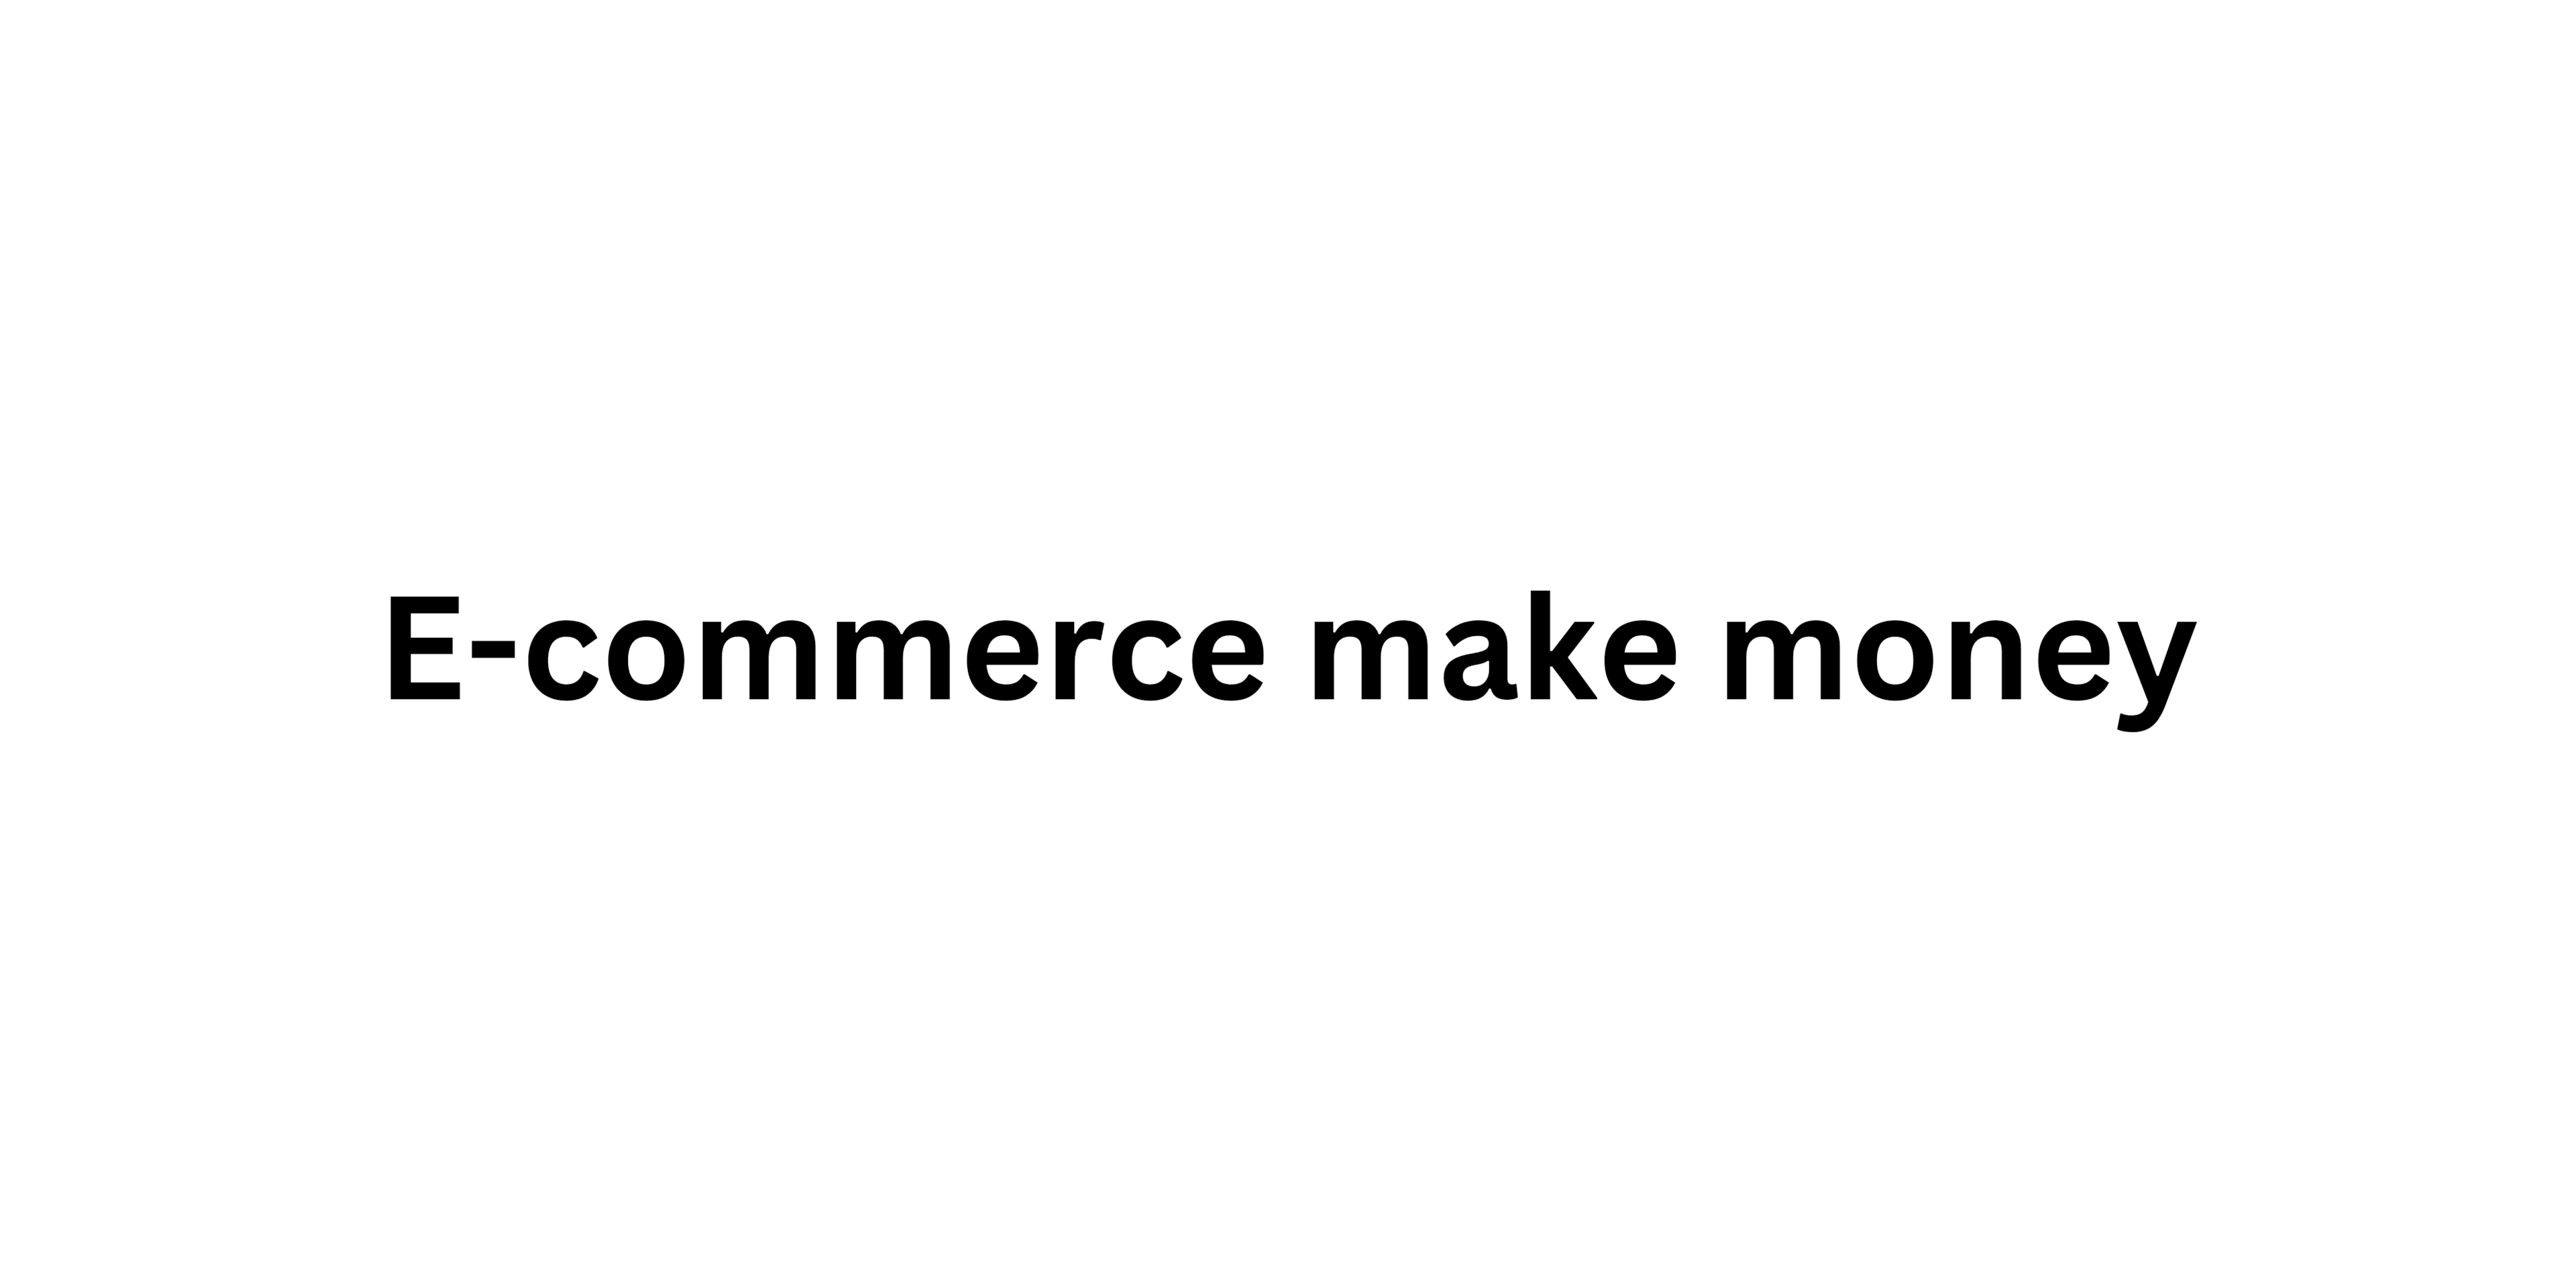 E-commerce make money